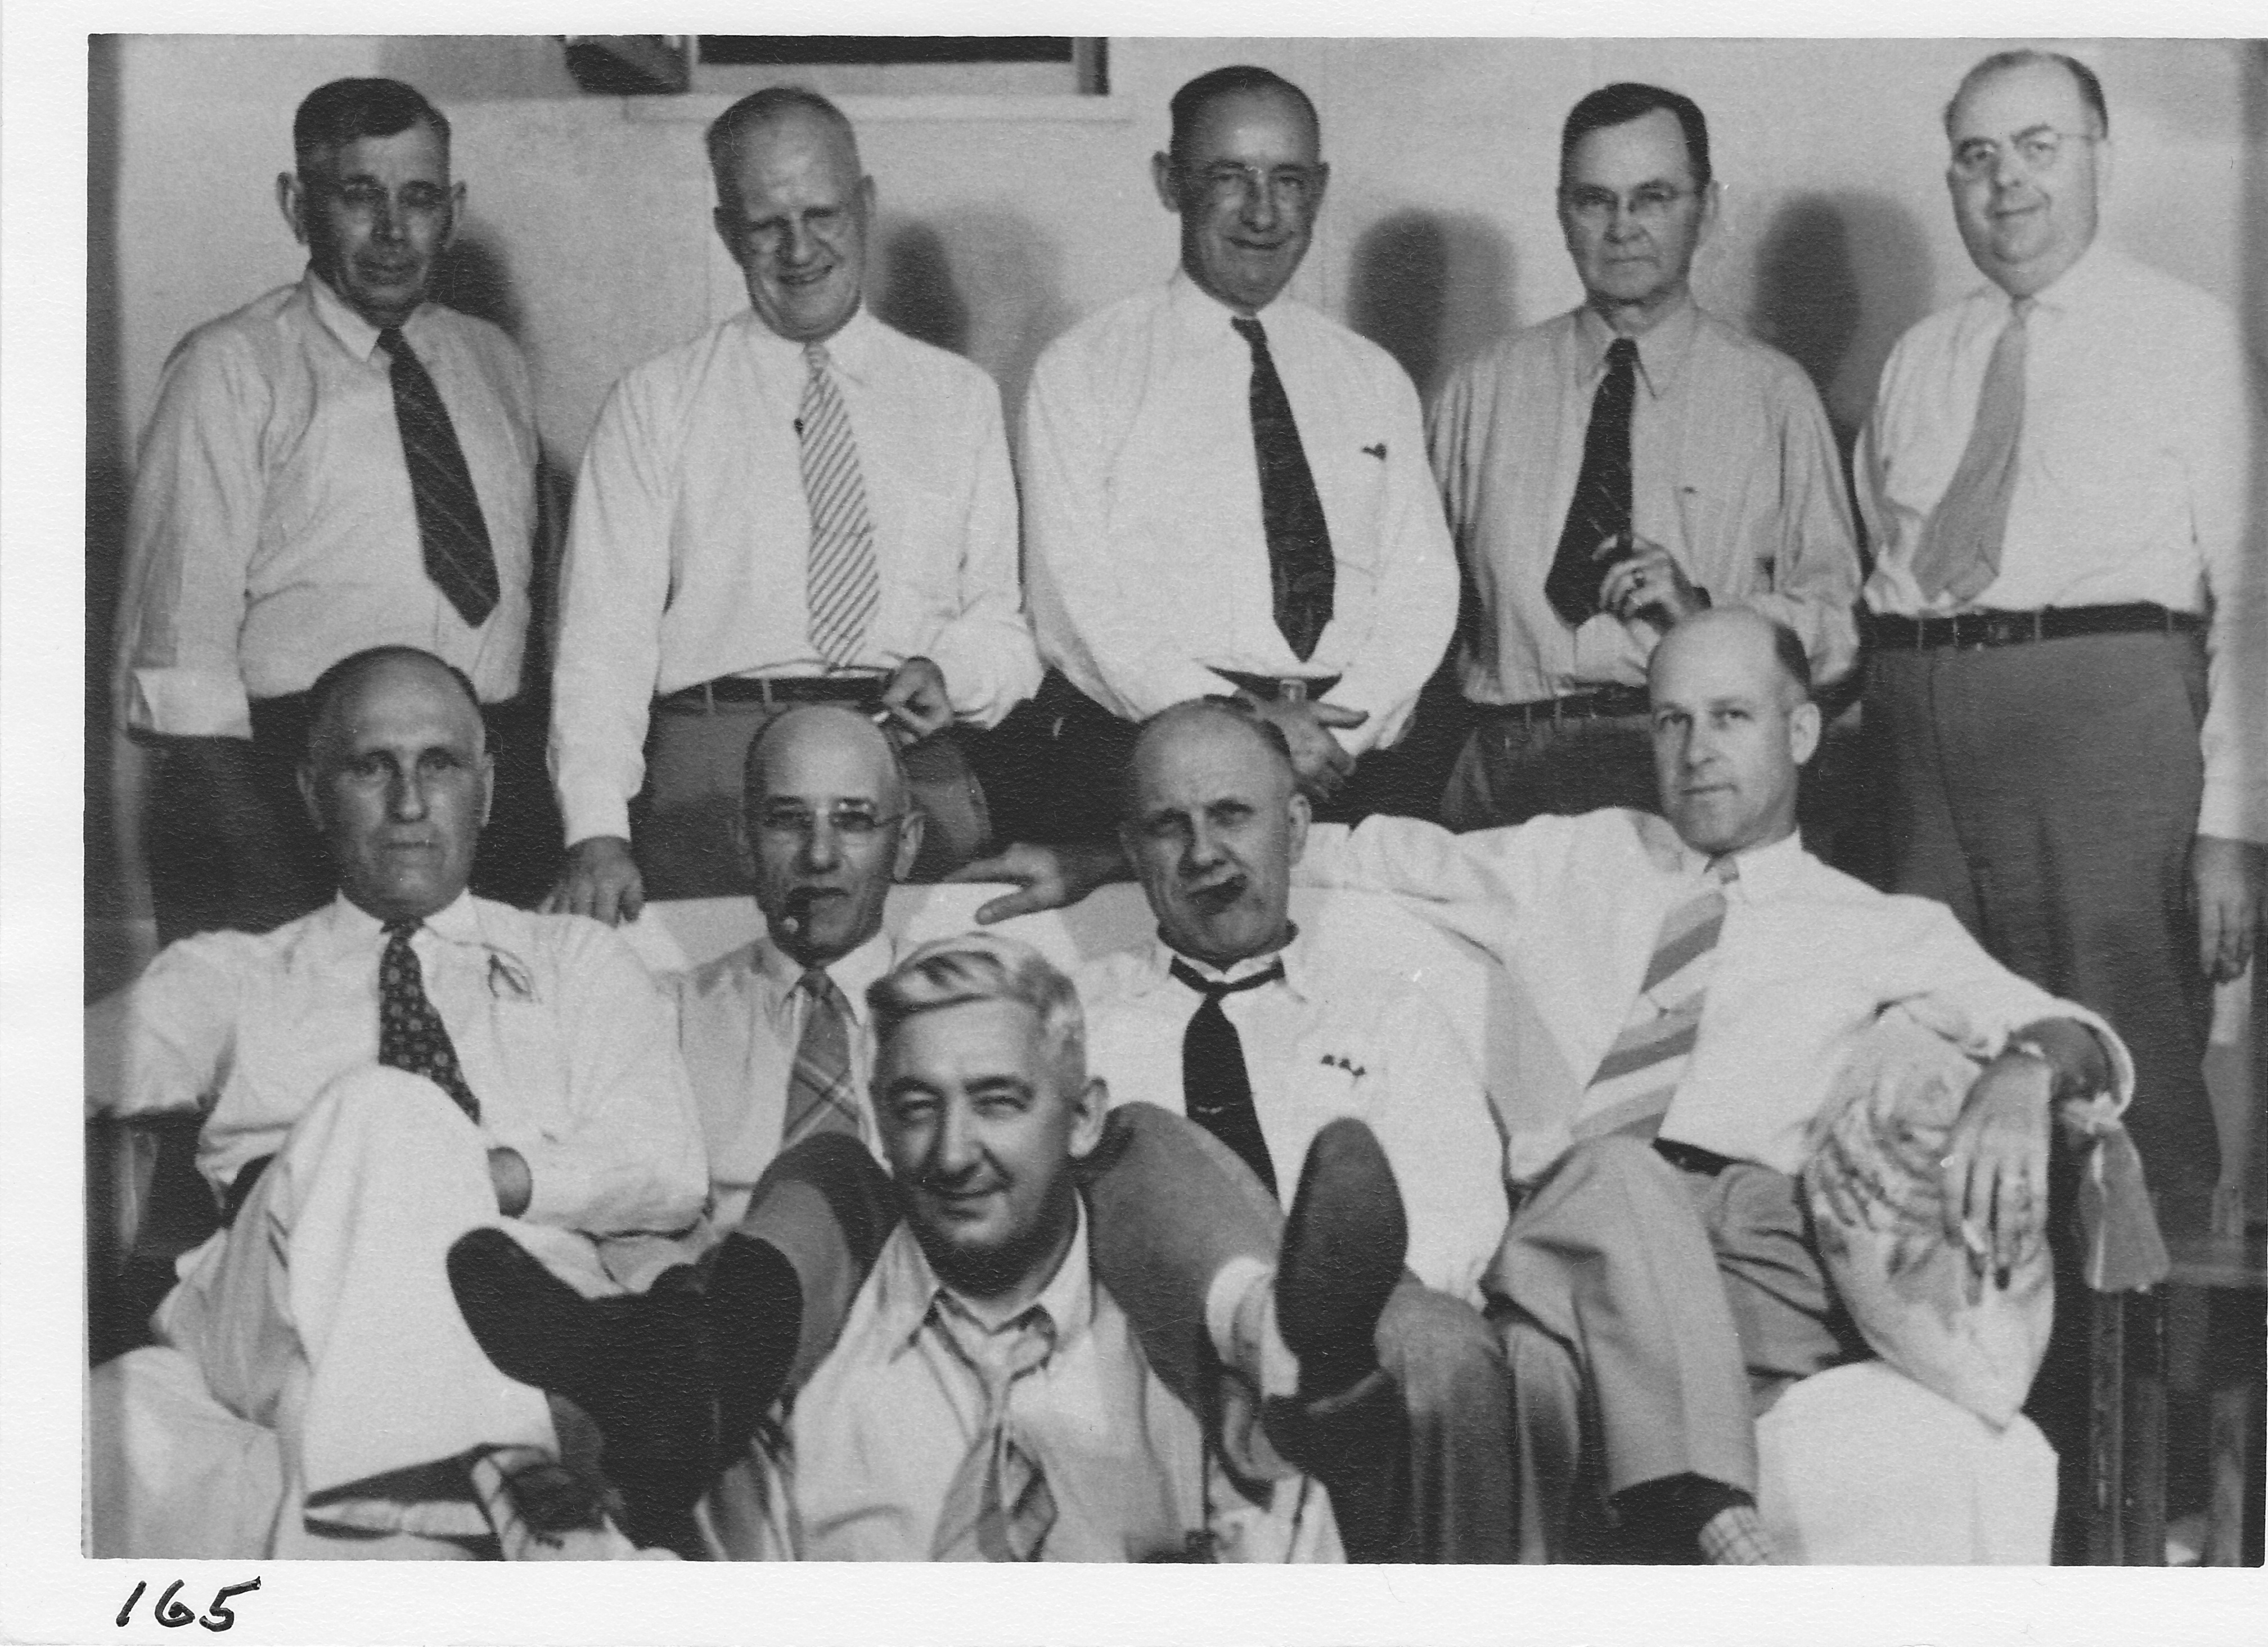 Poker Club. C. Smith, J. Reynolds, M. Swaney, J. Munro, M. Green, C. Fauver, C. Fellows, E. Yoder, M. Clark, G. H. Gerlach.